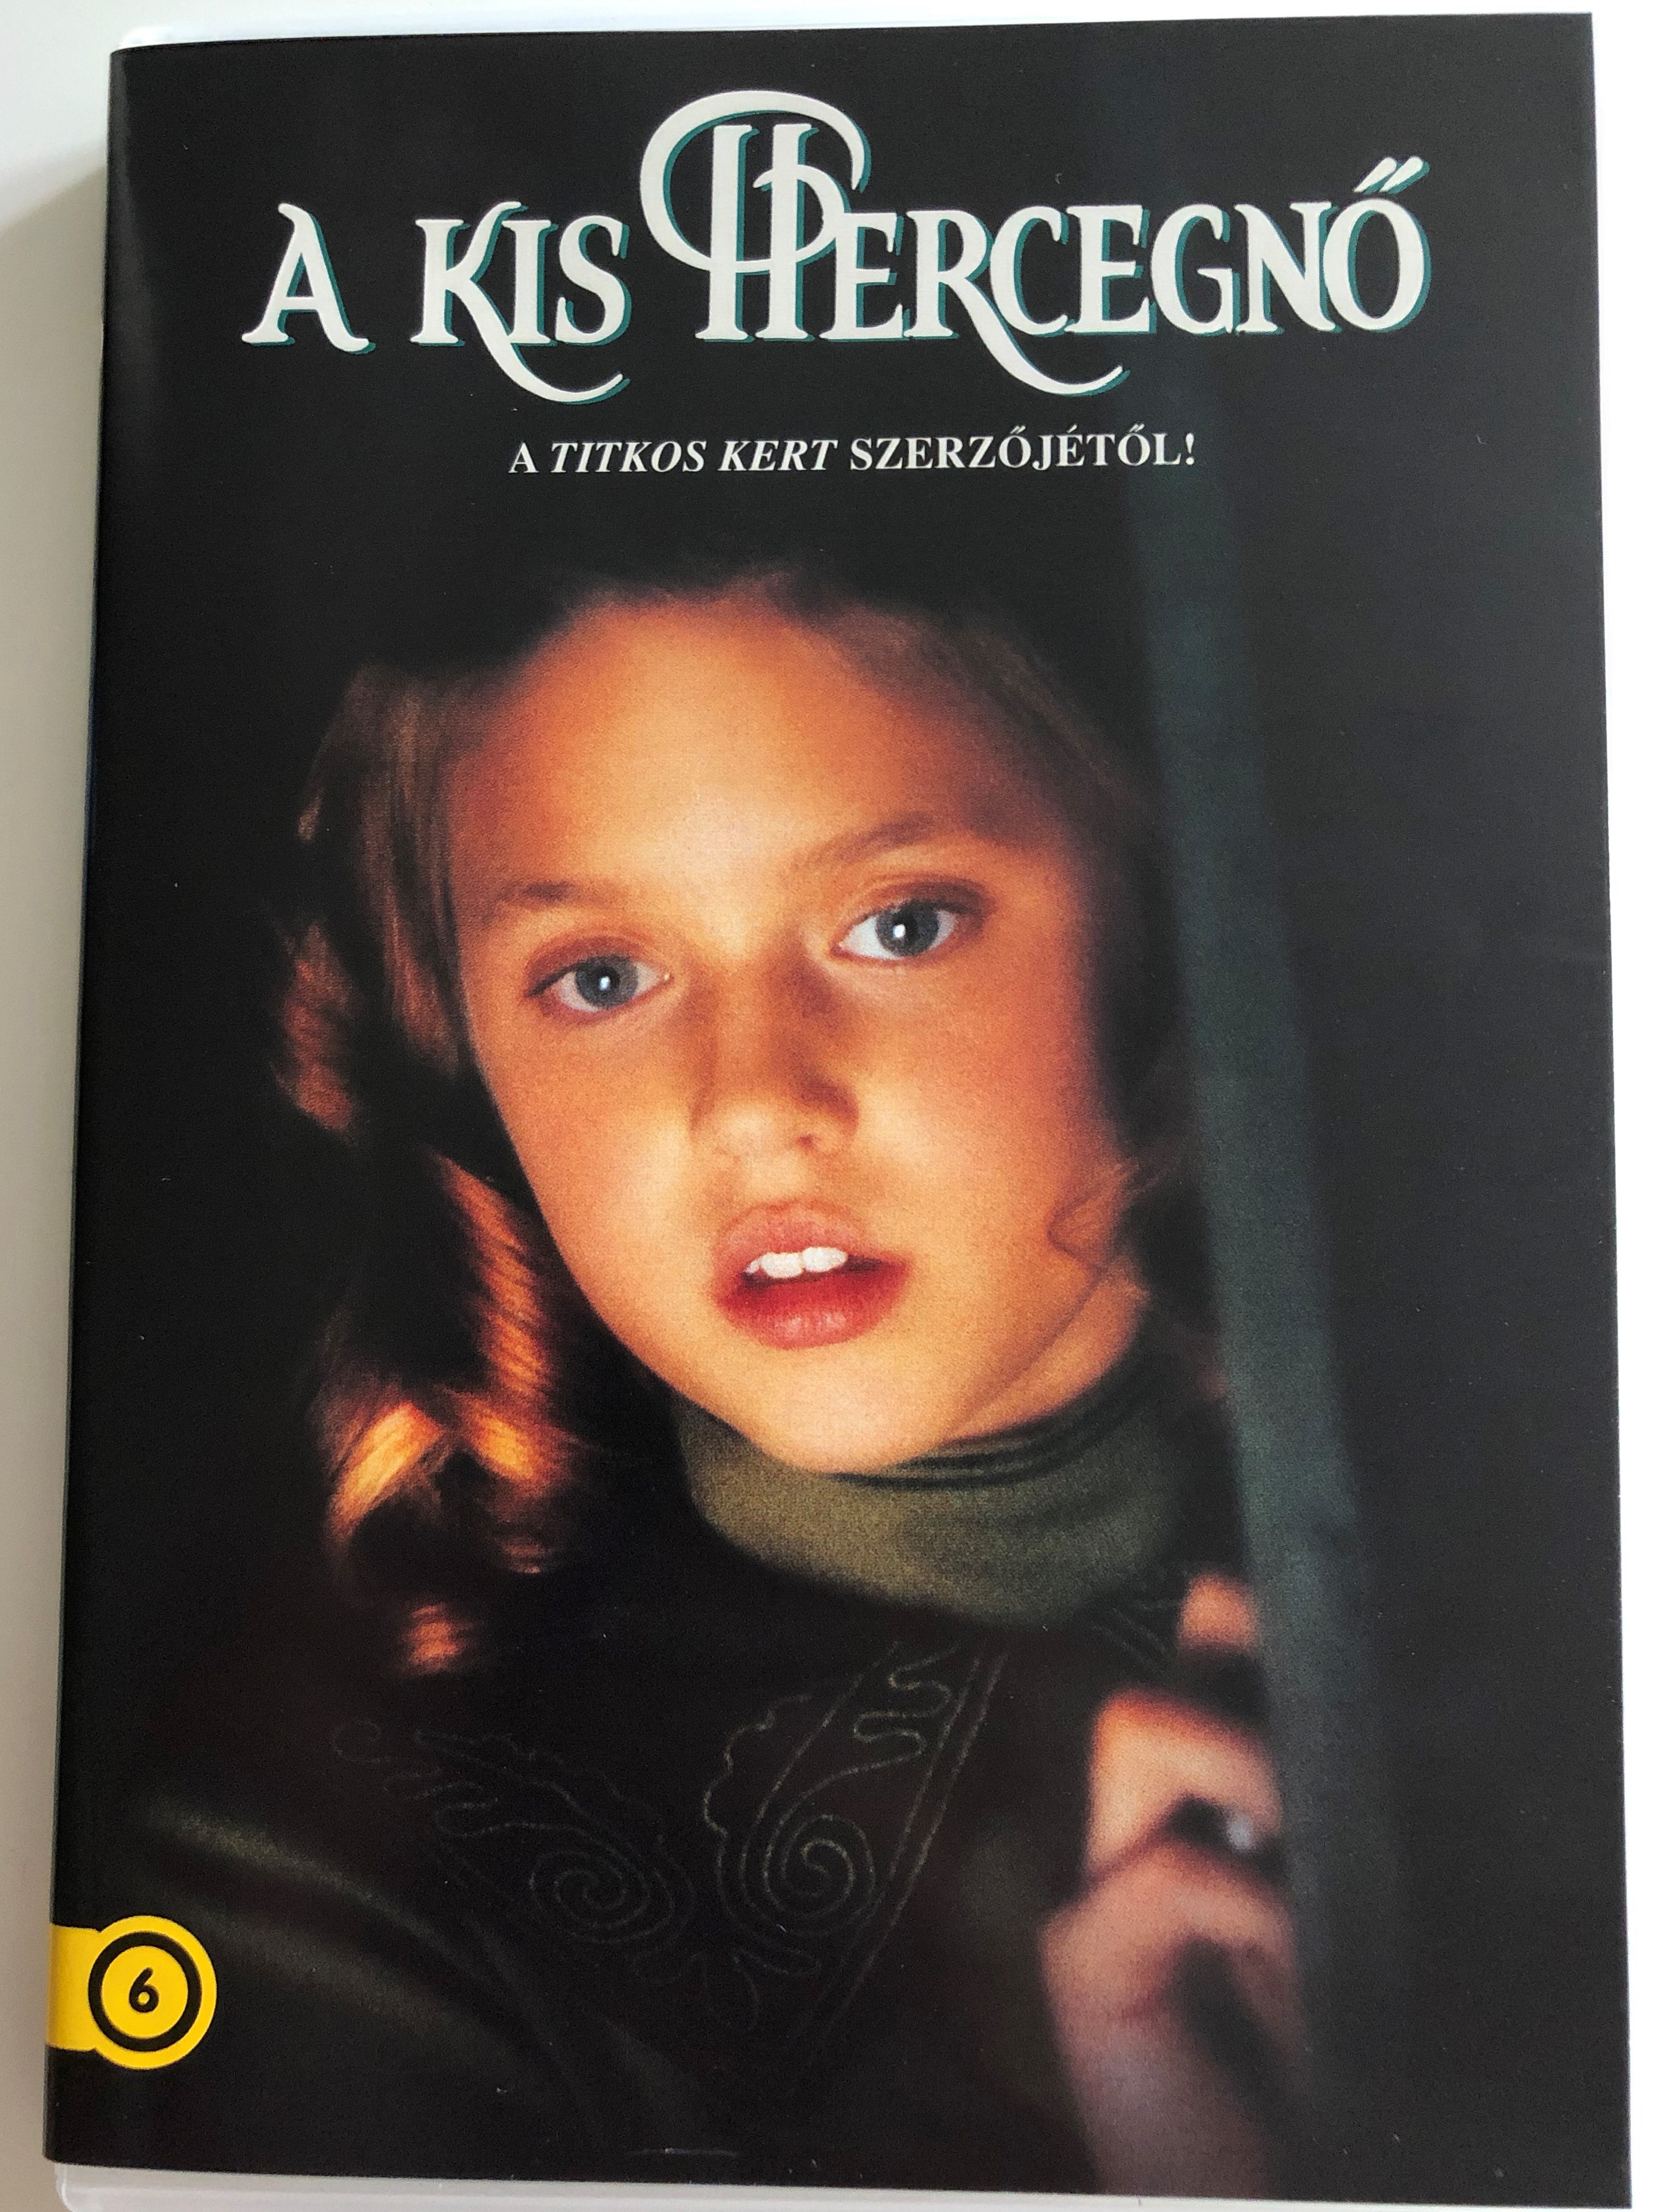 a-little-princess-dvd-1995-a-kis-hercegn-directed-by-alfonso-cuaron-starring-eleanor-bron-liam-cunningham-liesel-matthews-1-.jpg